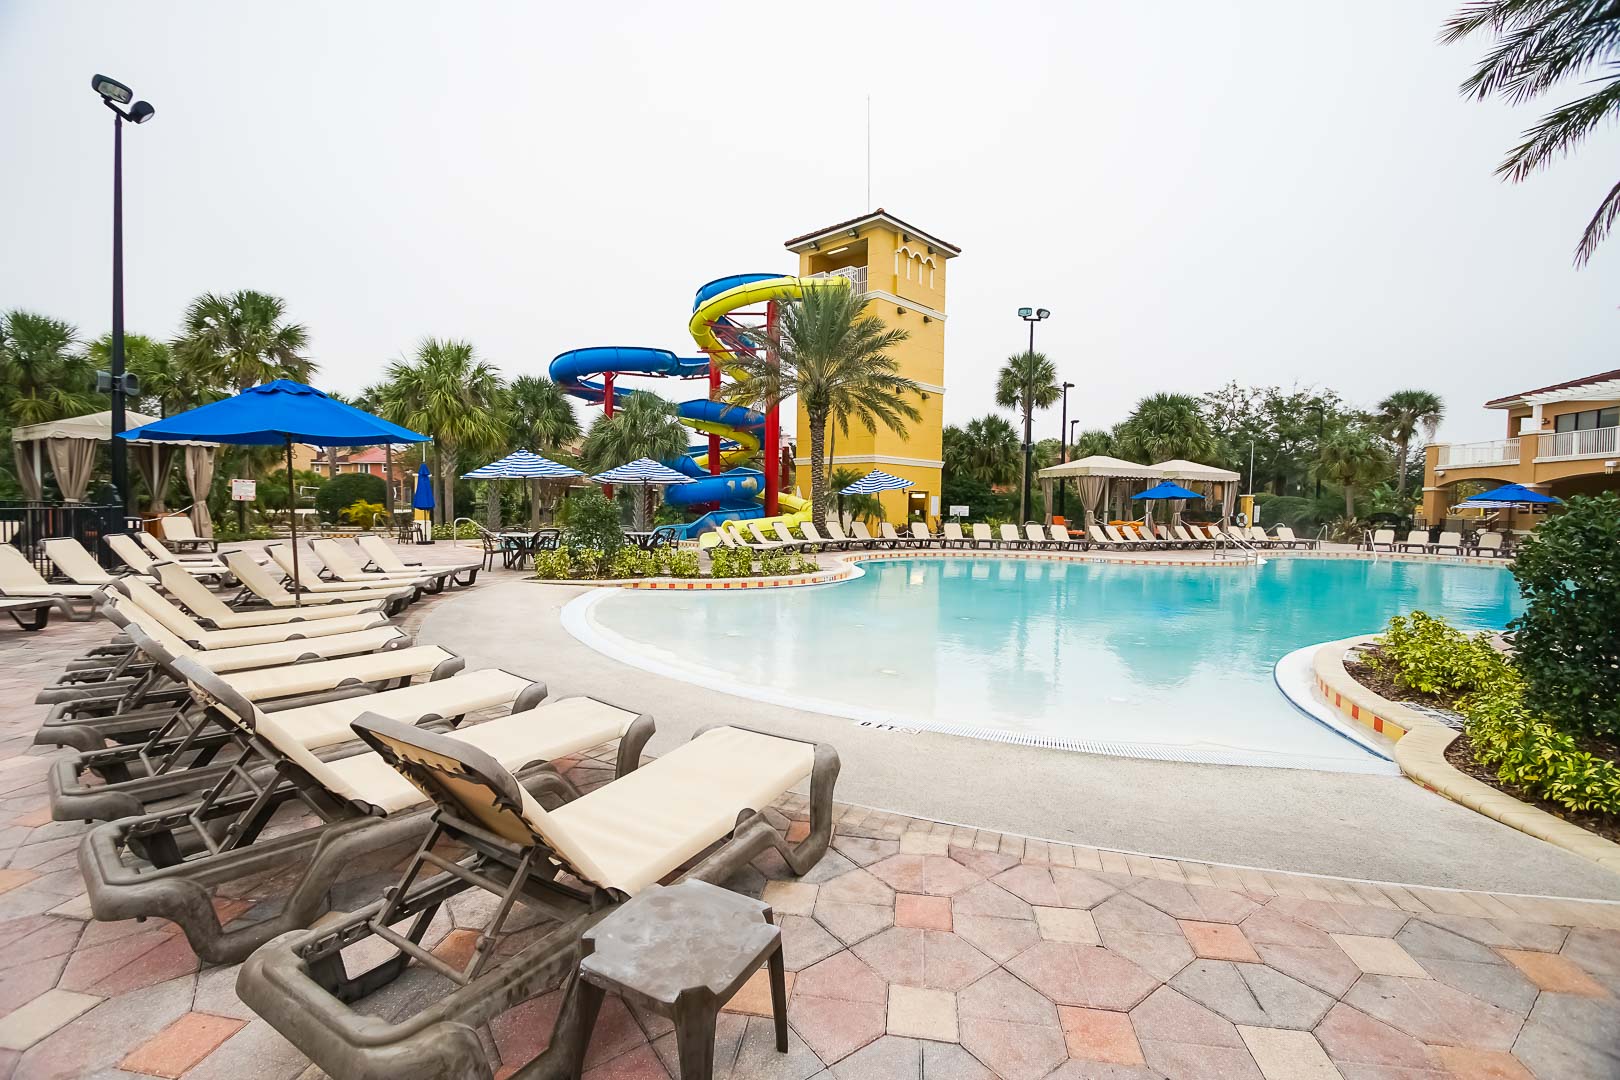 A fun filled water-slide at VRI's Fantasy World Resort in Florida.